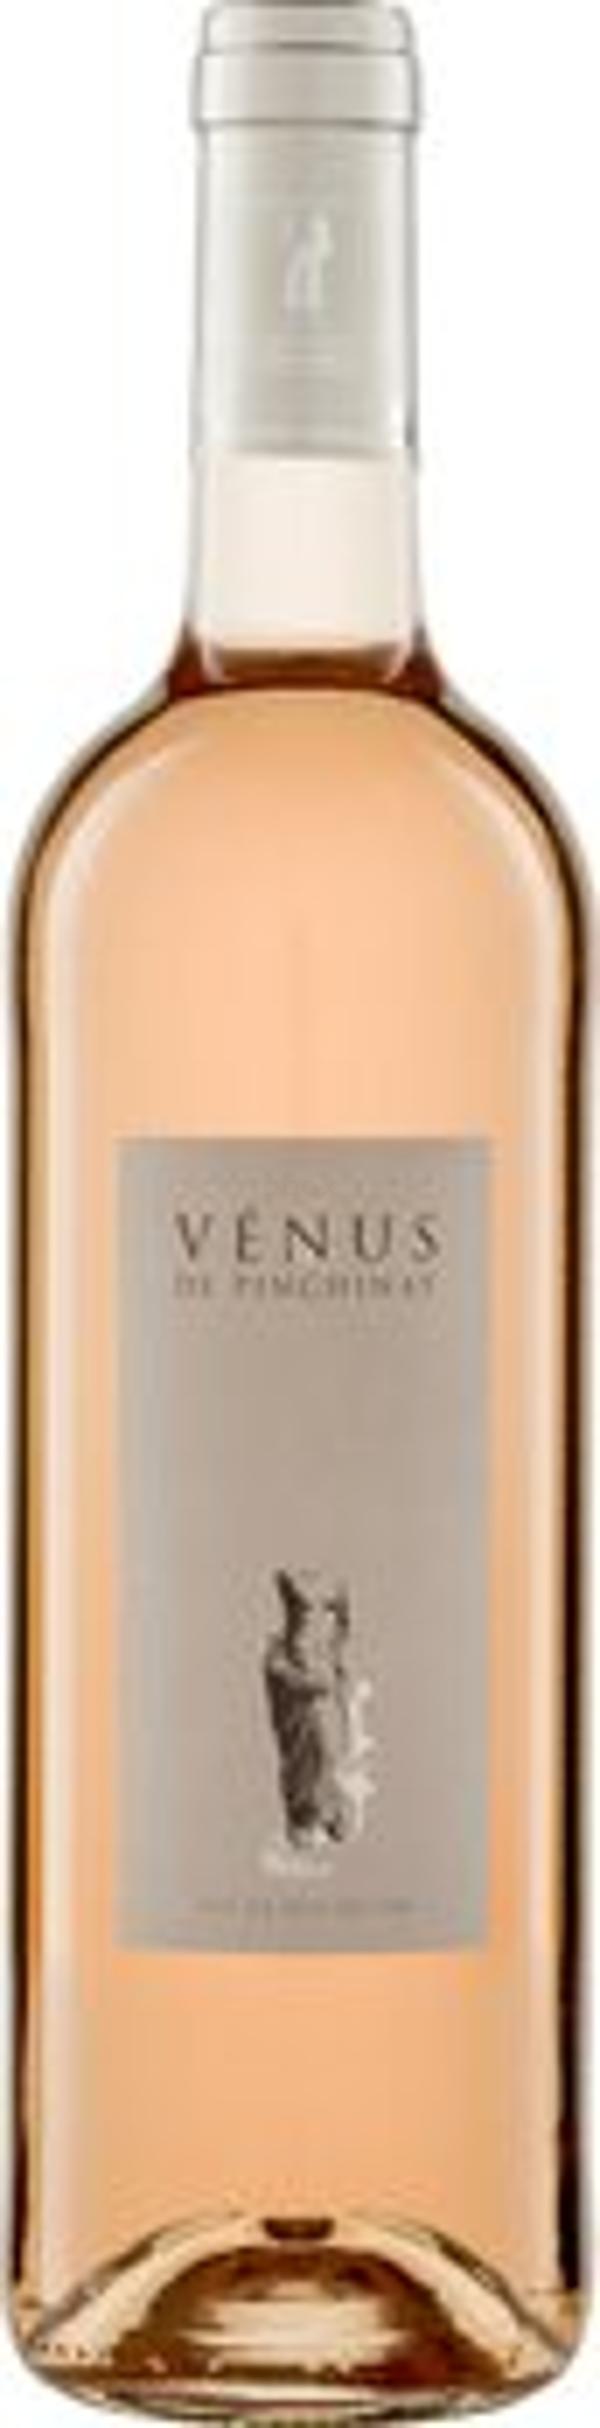 Produktfoto zu Venus' Rosé IGP, Rosewein trocken 0,75l